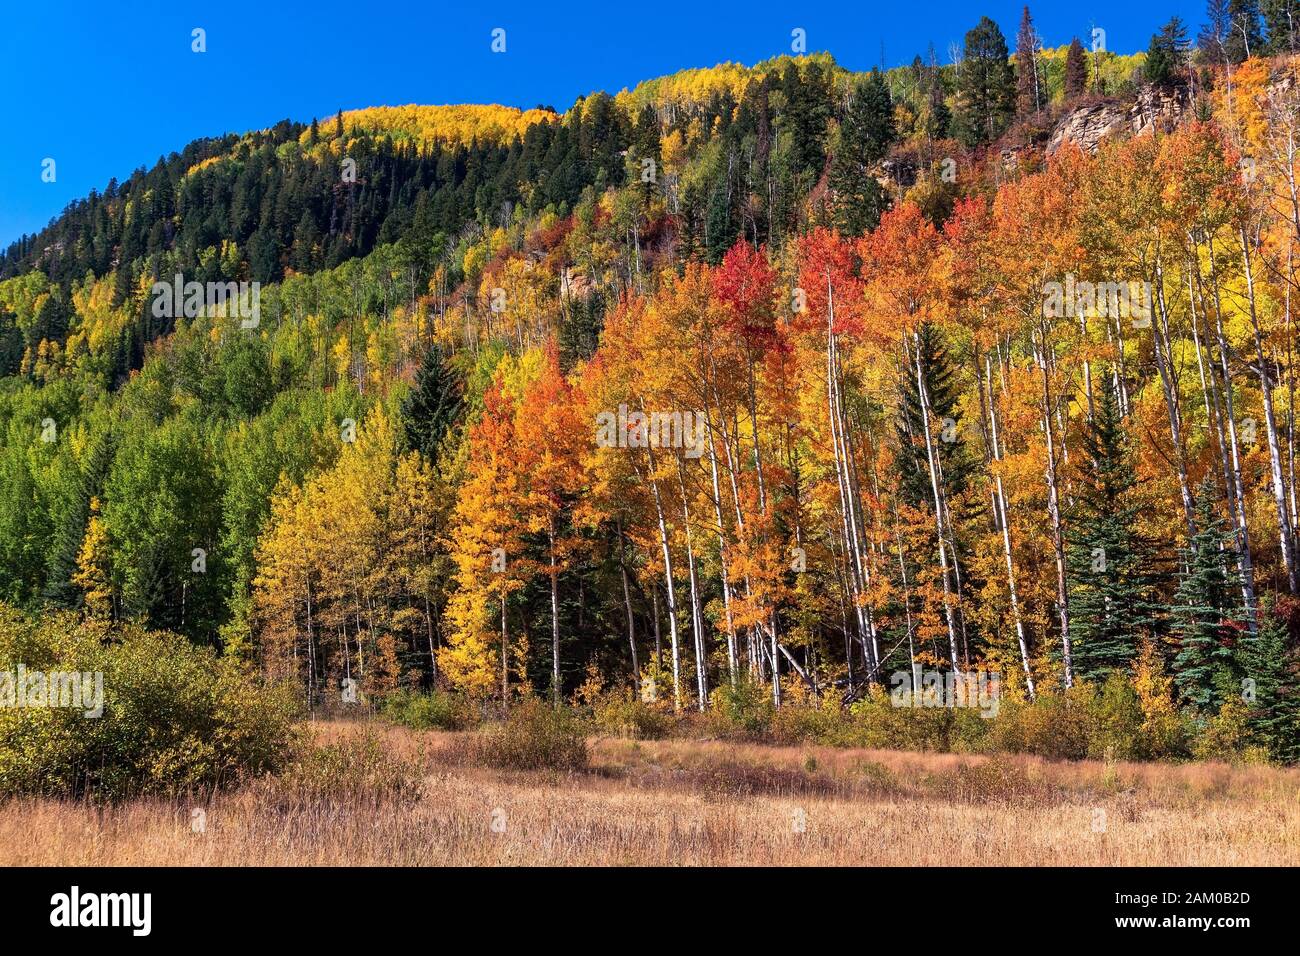 Aspen trees with vibrant fall colors in the San Juan Mountains near Durango, Colorado Stock Photo